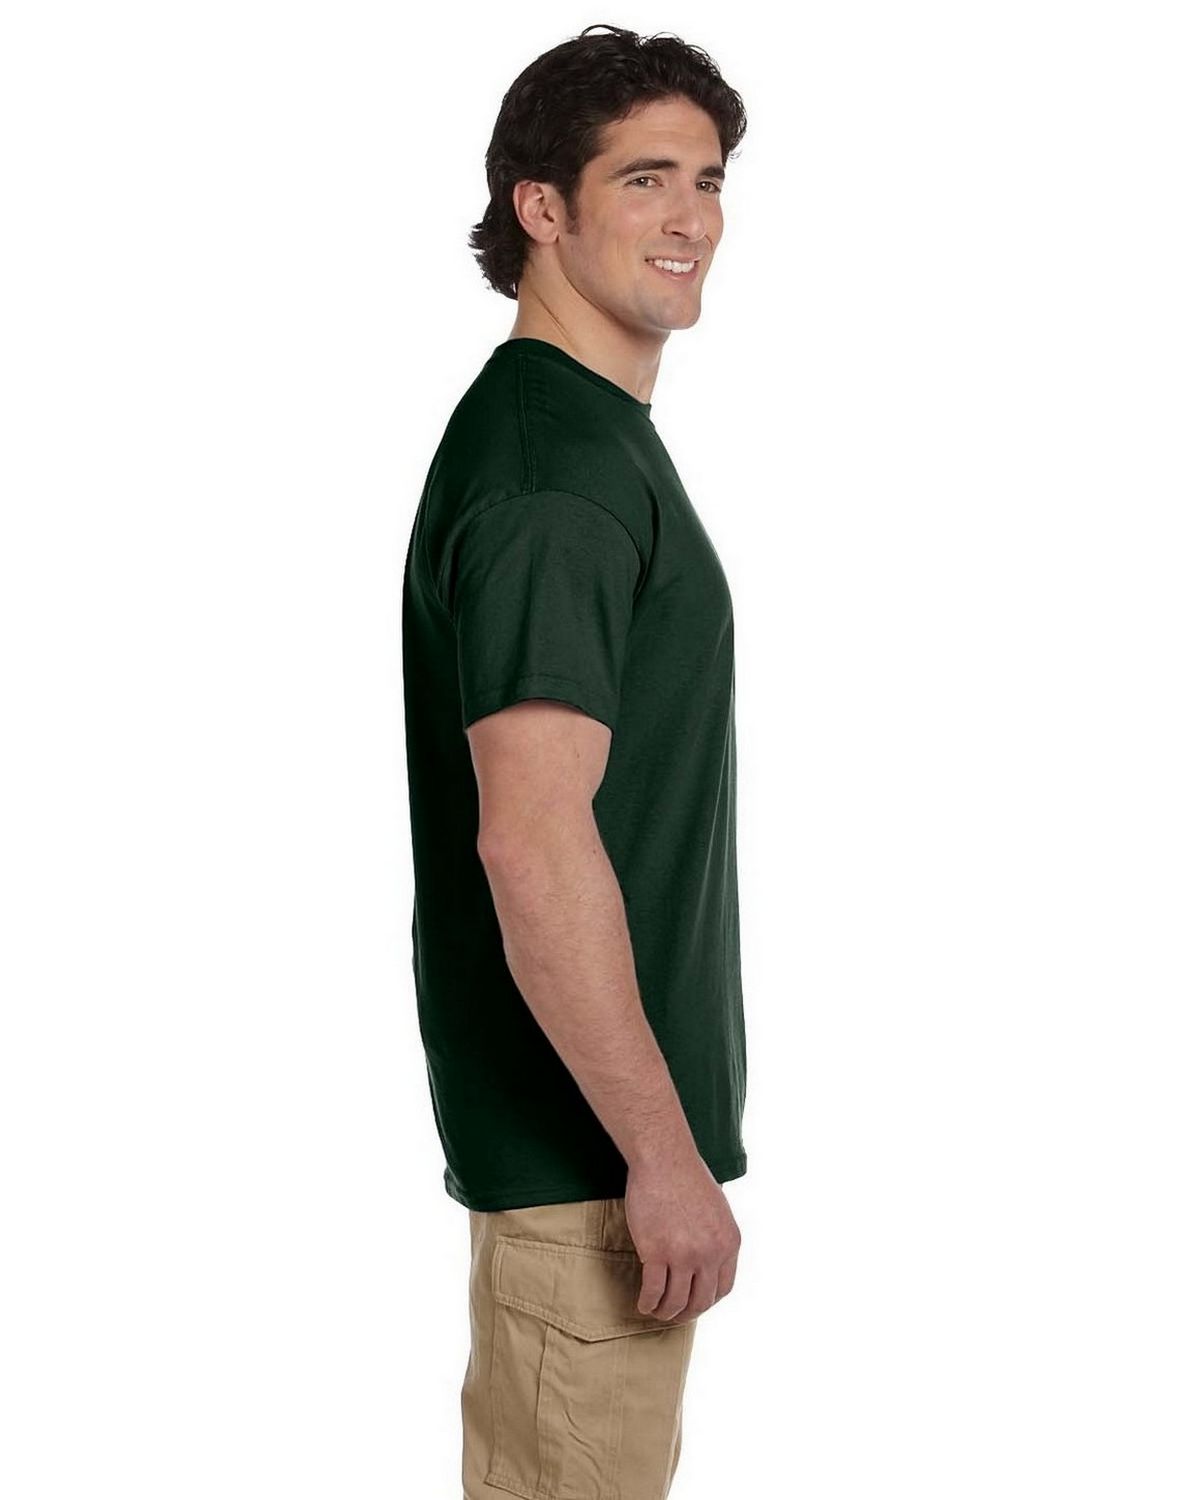 Jerzees 363 Hidensi Cotton T Shirt - ApparelnBags.com